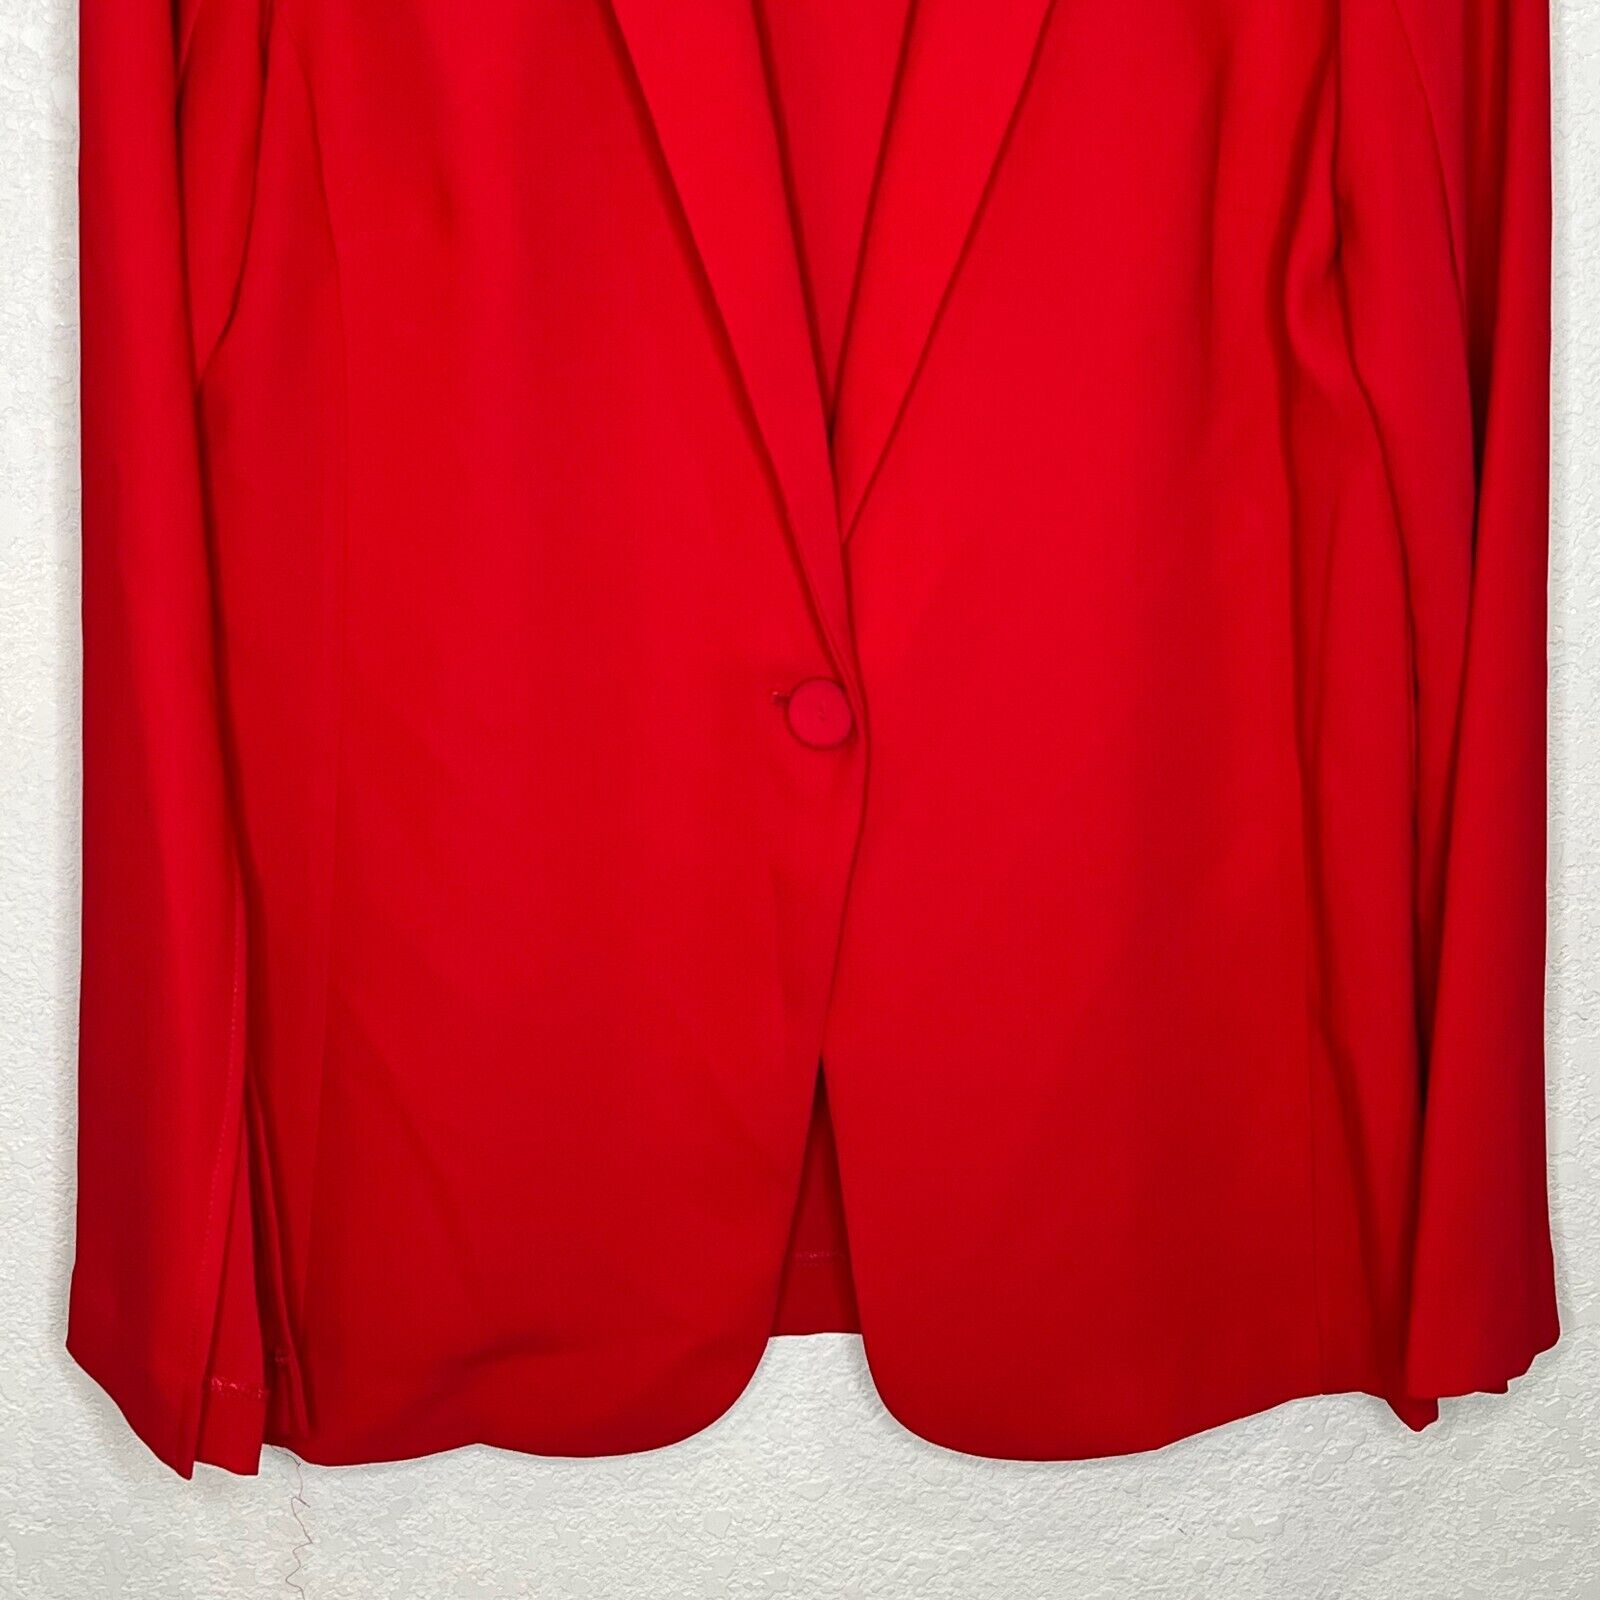 Amanda Uprichard Nolita Red Scarlett Blazer Tailored with Single Button Closure 